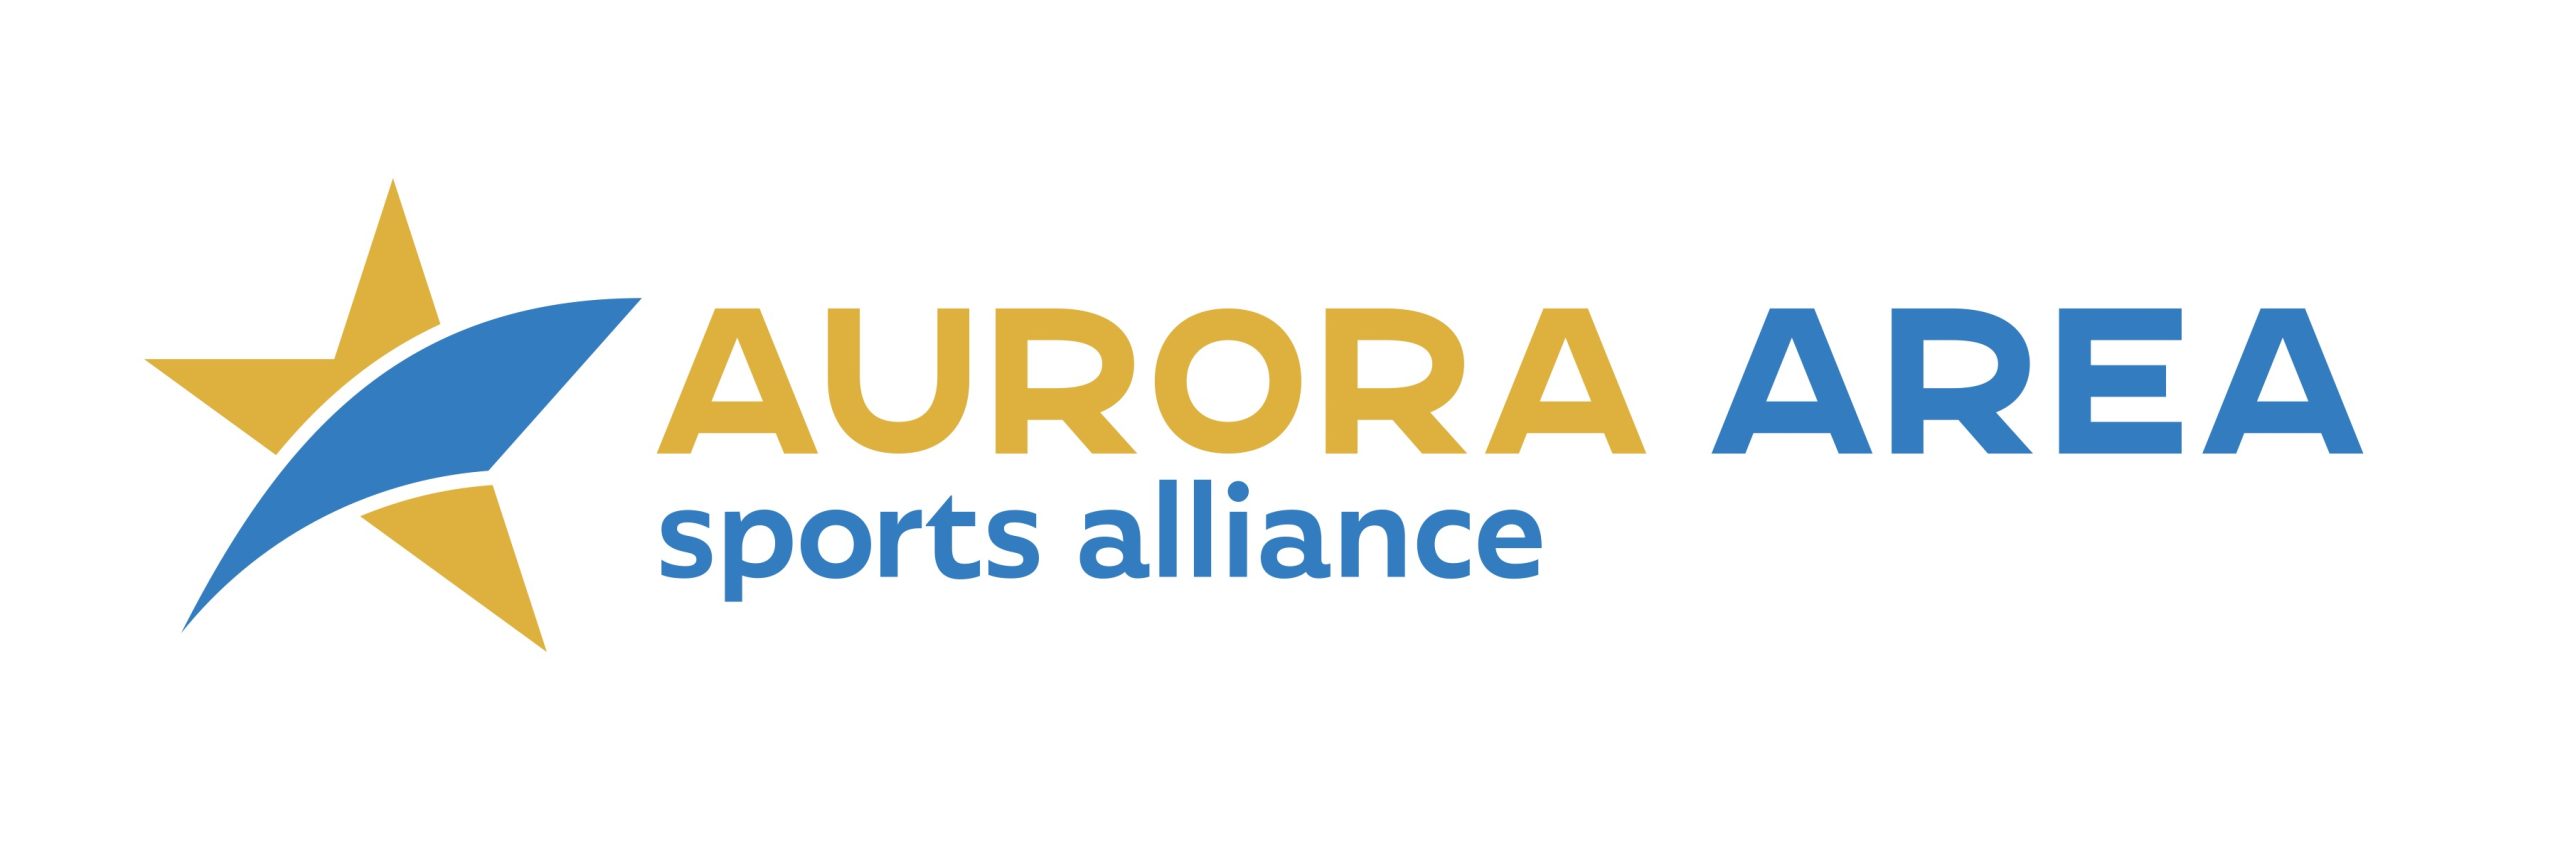 Aurora Area Logo